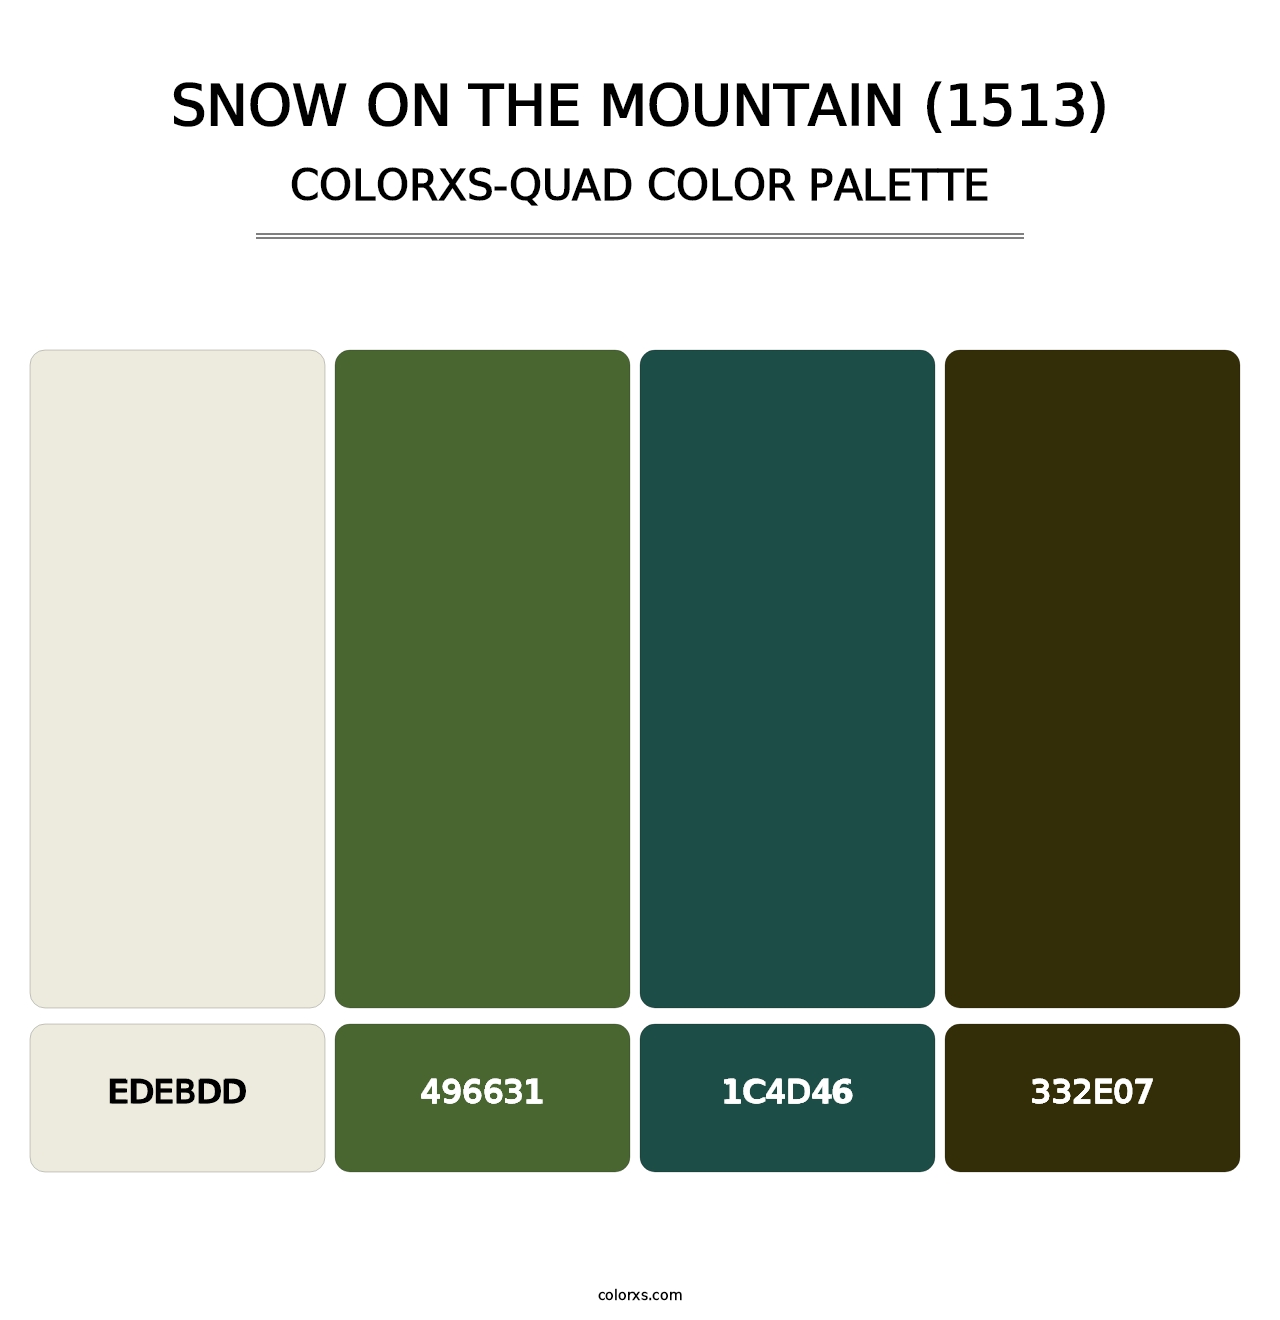 Snow on the Mountain (1513) - Colorxs Quad Palette